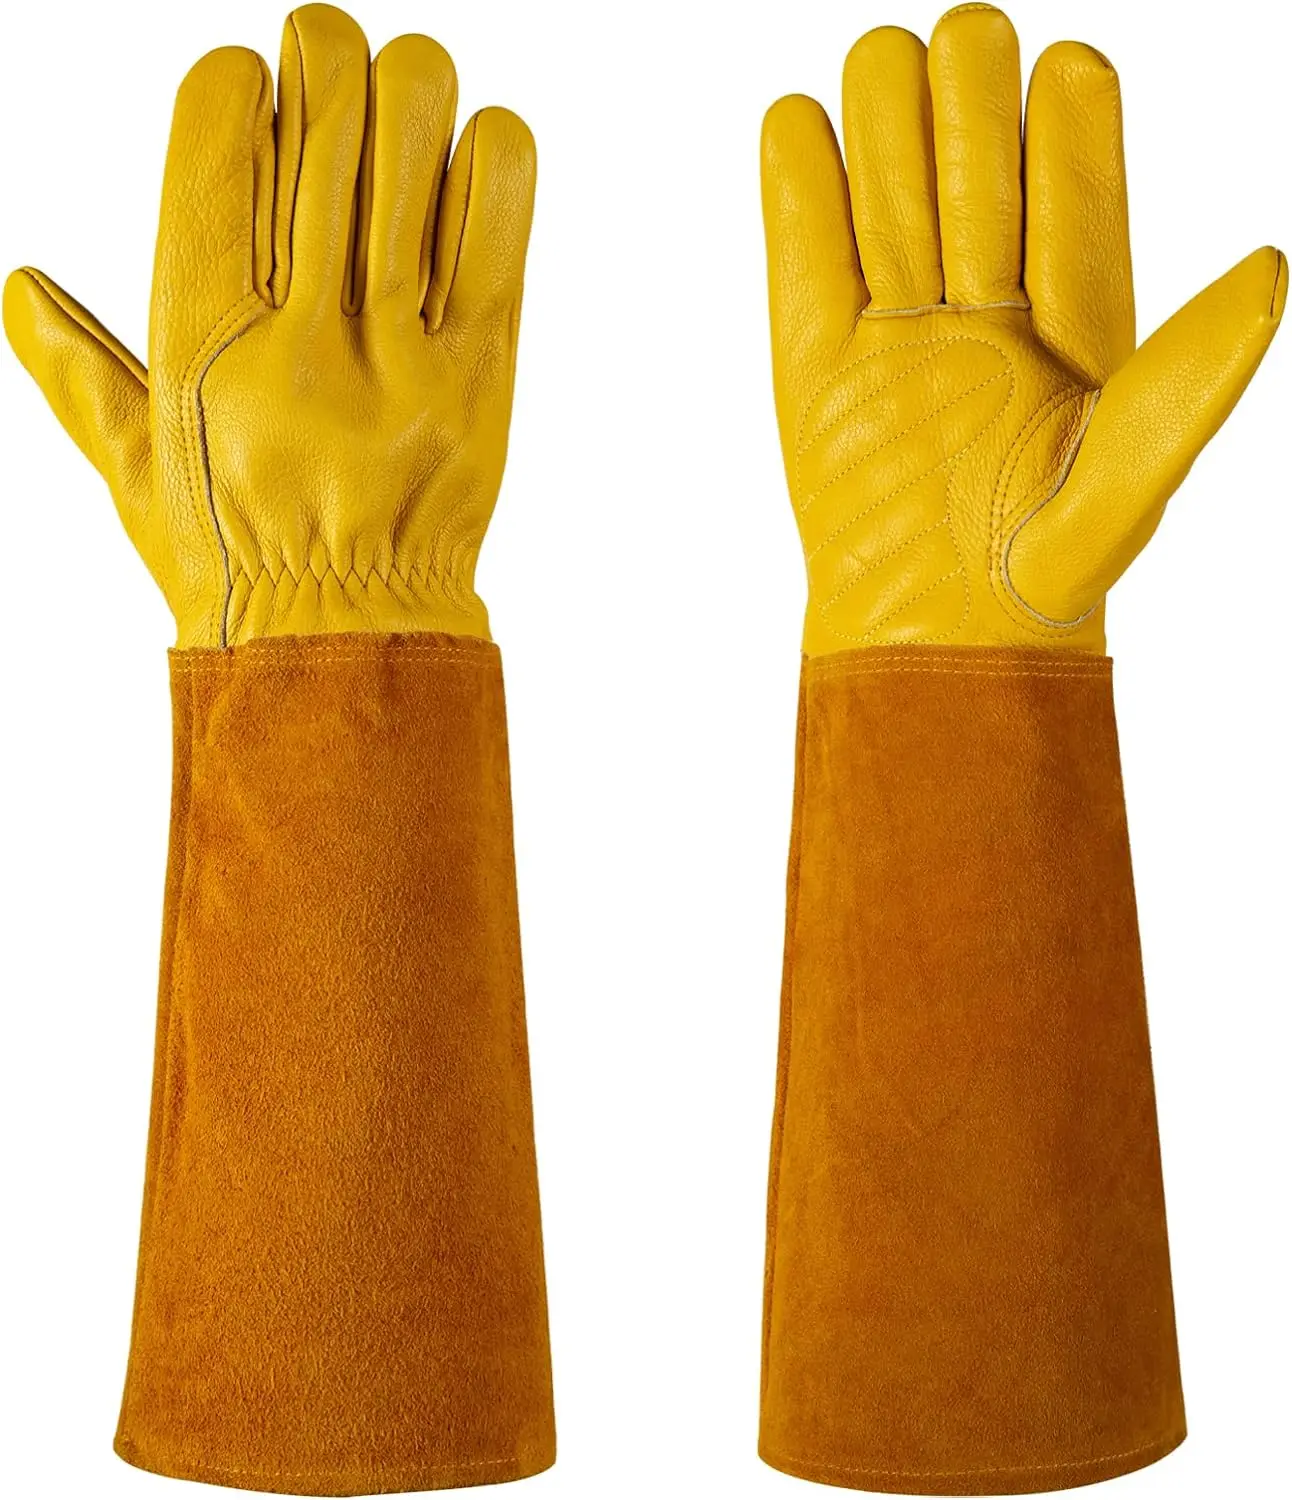 

Gardening Gloves Women/Men Rose Pruning Thorn Anti-Cut Long Forearm Protective Gloves, Anti-Thick Cowhide Work Garden Gloves